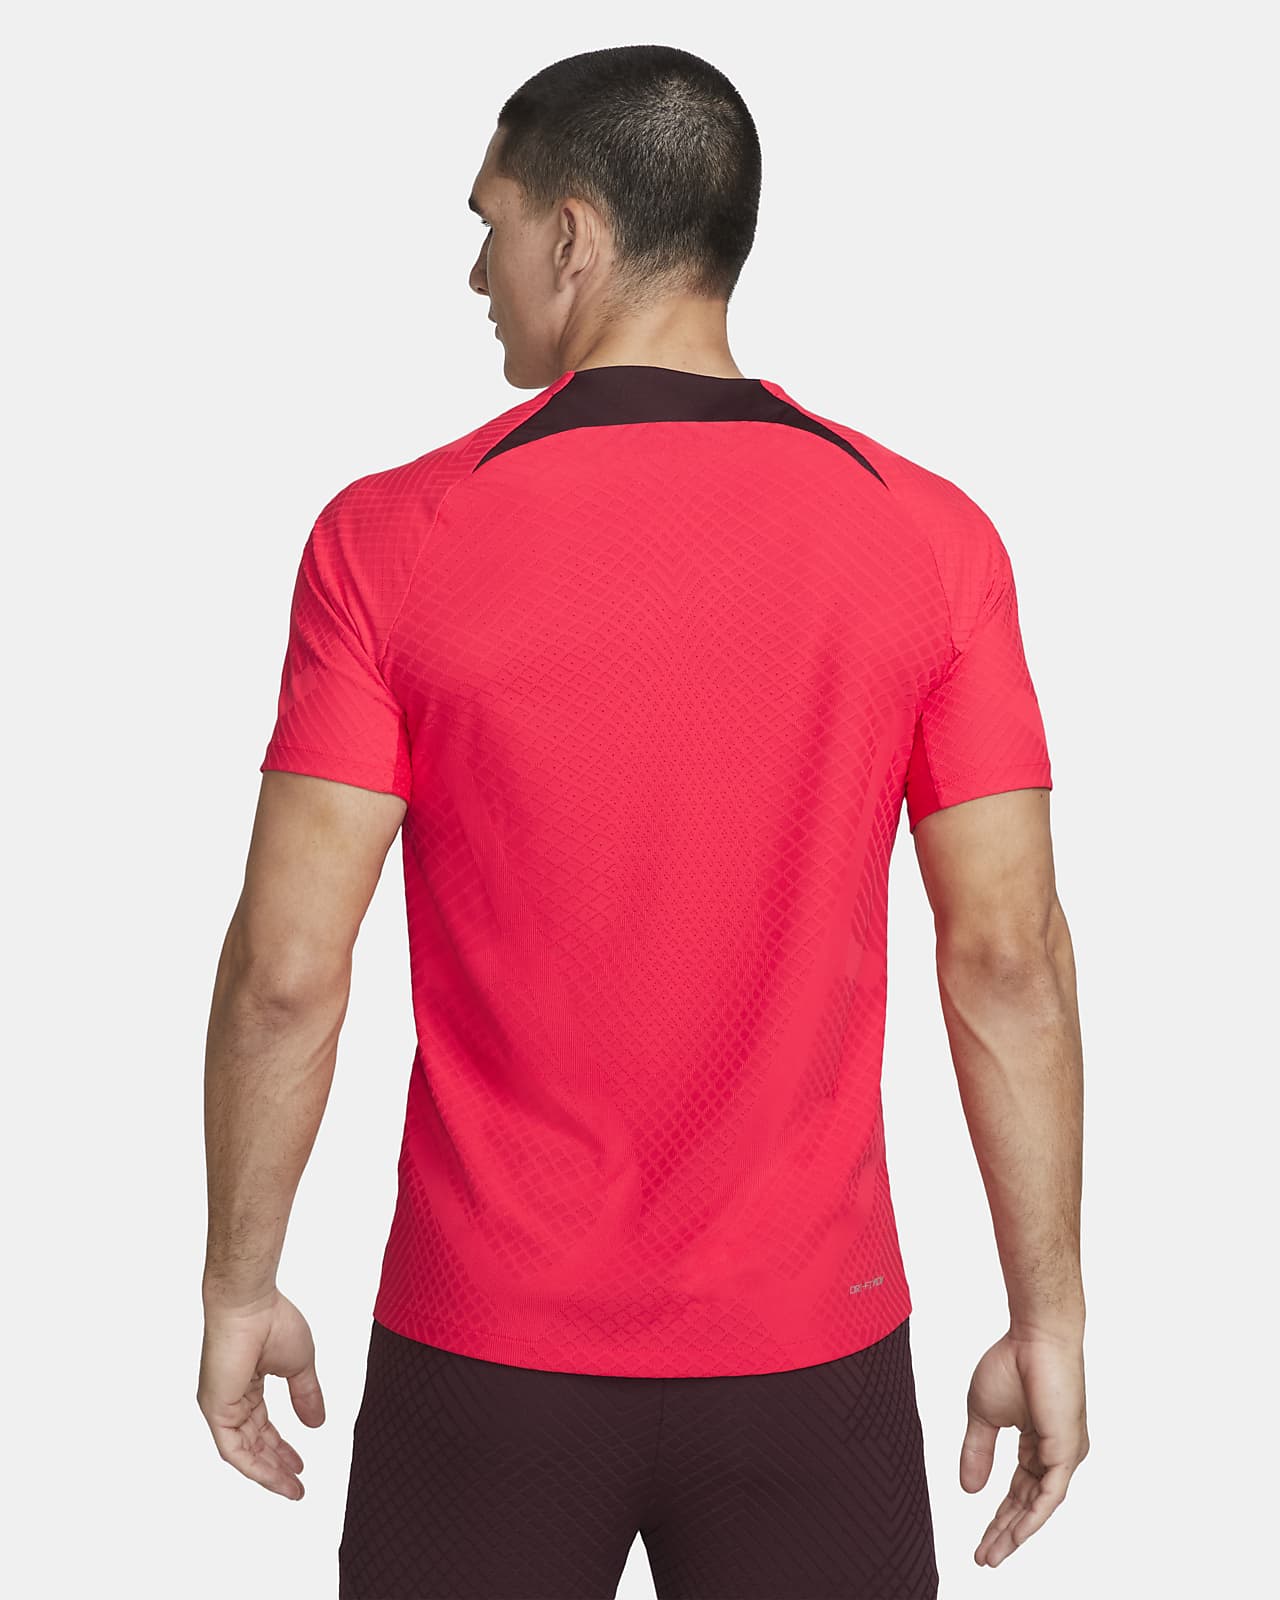 Th Spin kroeg Liverpool FC Strike Elite Men's Nike Dri-FIT ADV Short-Sleeve Soccer Top.  Nike.com